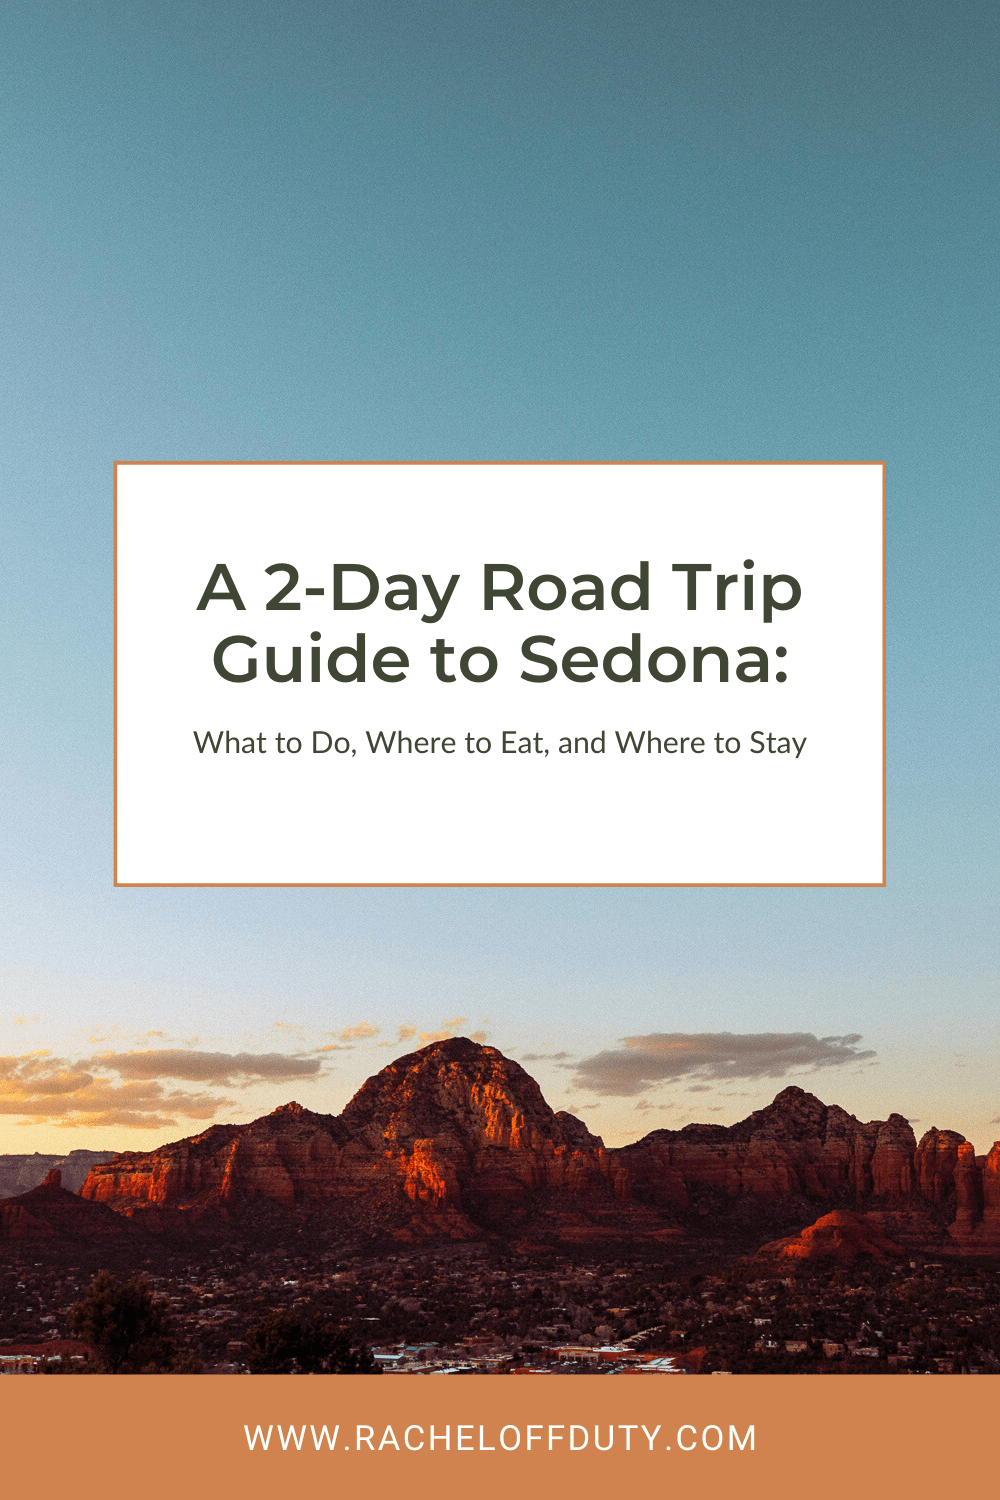 Rachel Off Duty: A 2-Day Road Trip Guide to Sedona, Arizona